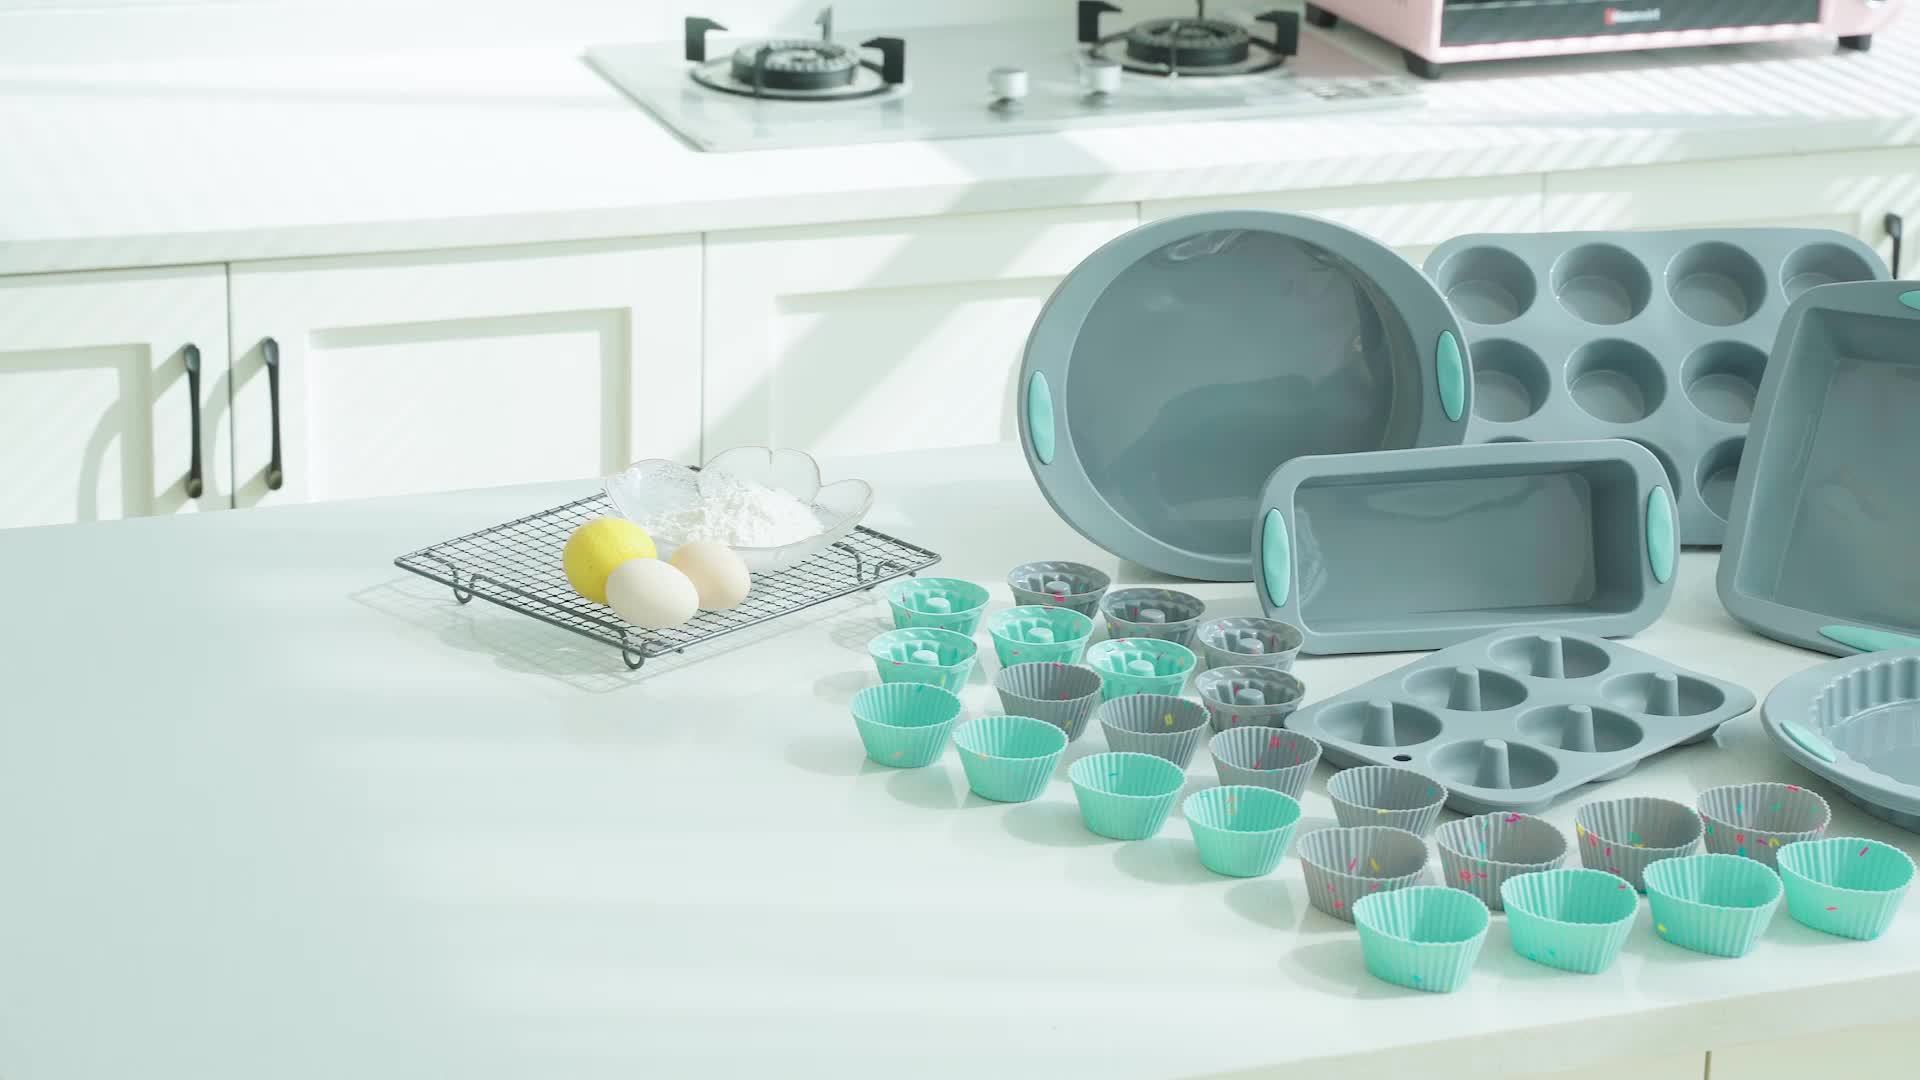 GreenLife Bakeware Ceramic Baking Set, 12pc, Turquoise